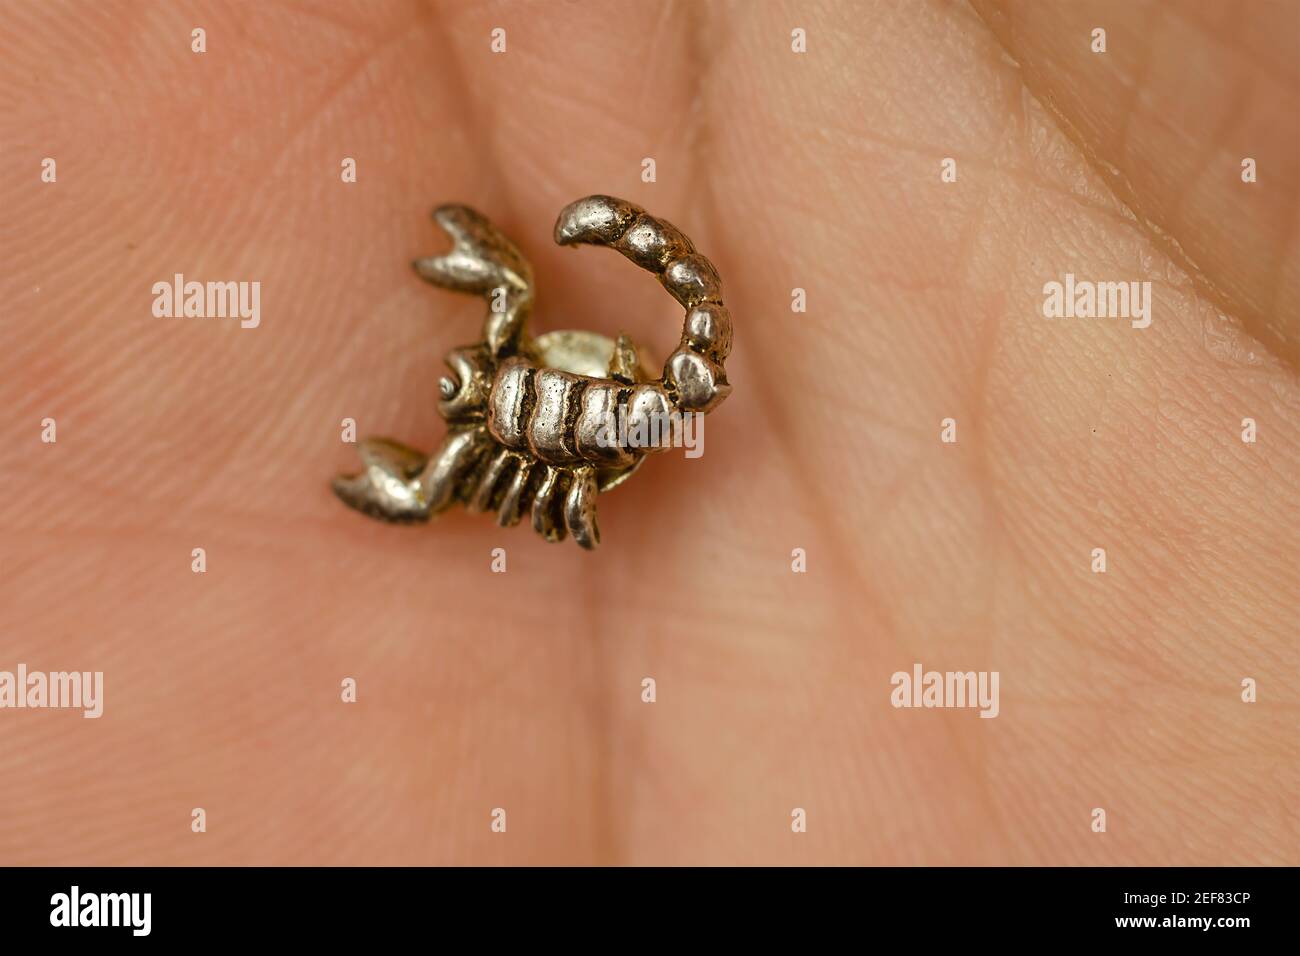 Real Scorpion Fotos e Imágenes de stock - Alamy